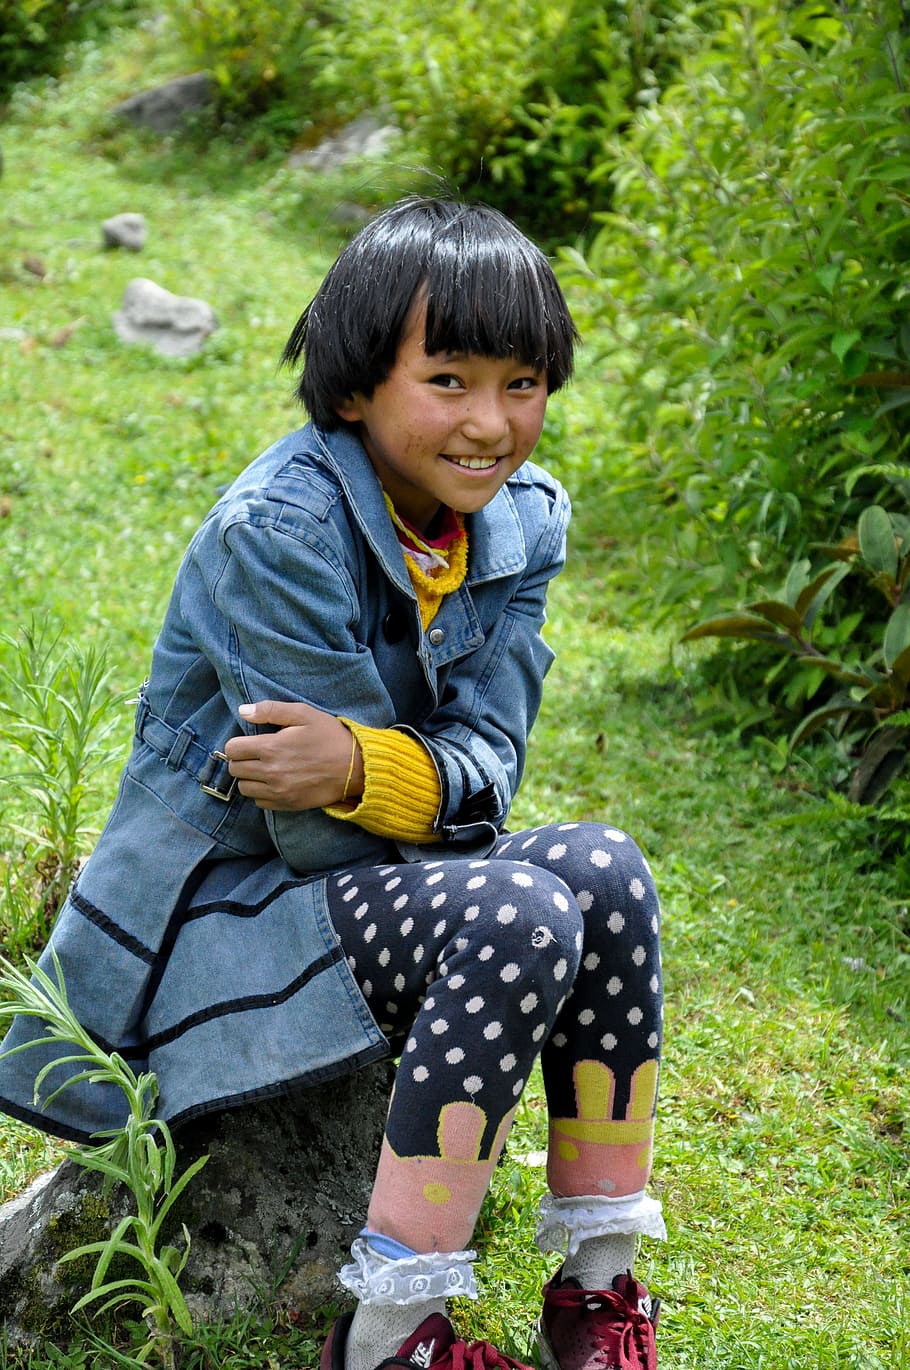 Tibetan, anak-anak, padang rumput, satu orang, masa kanak-kanak, anak, orang sungguhan, menanam, pakaian kasual, panjang penuh